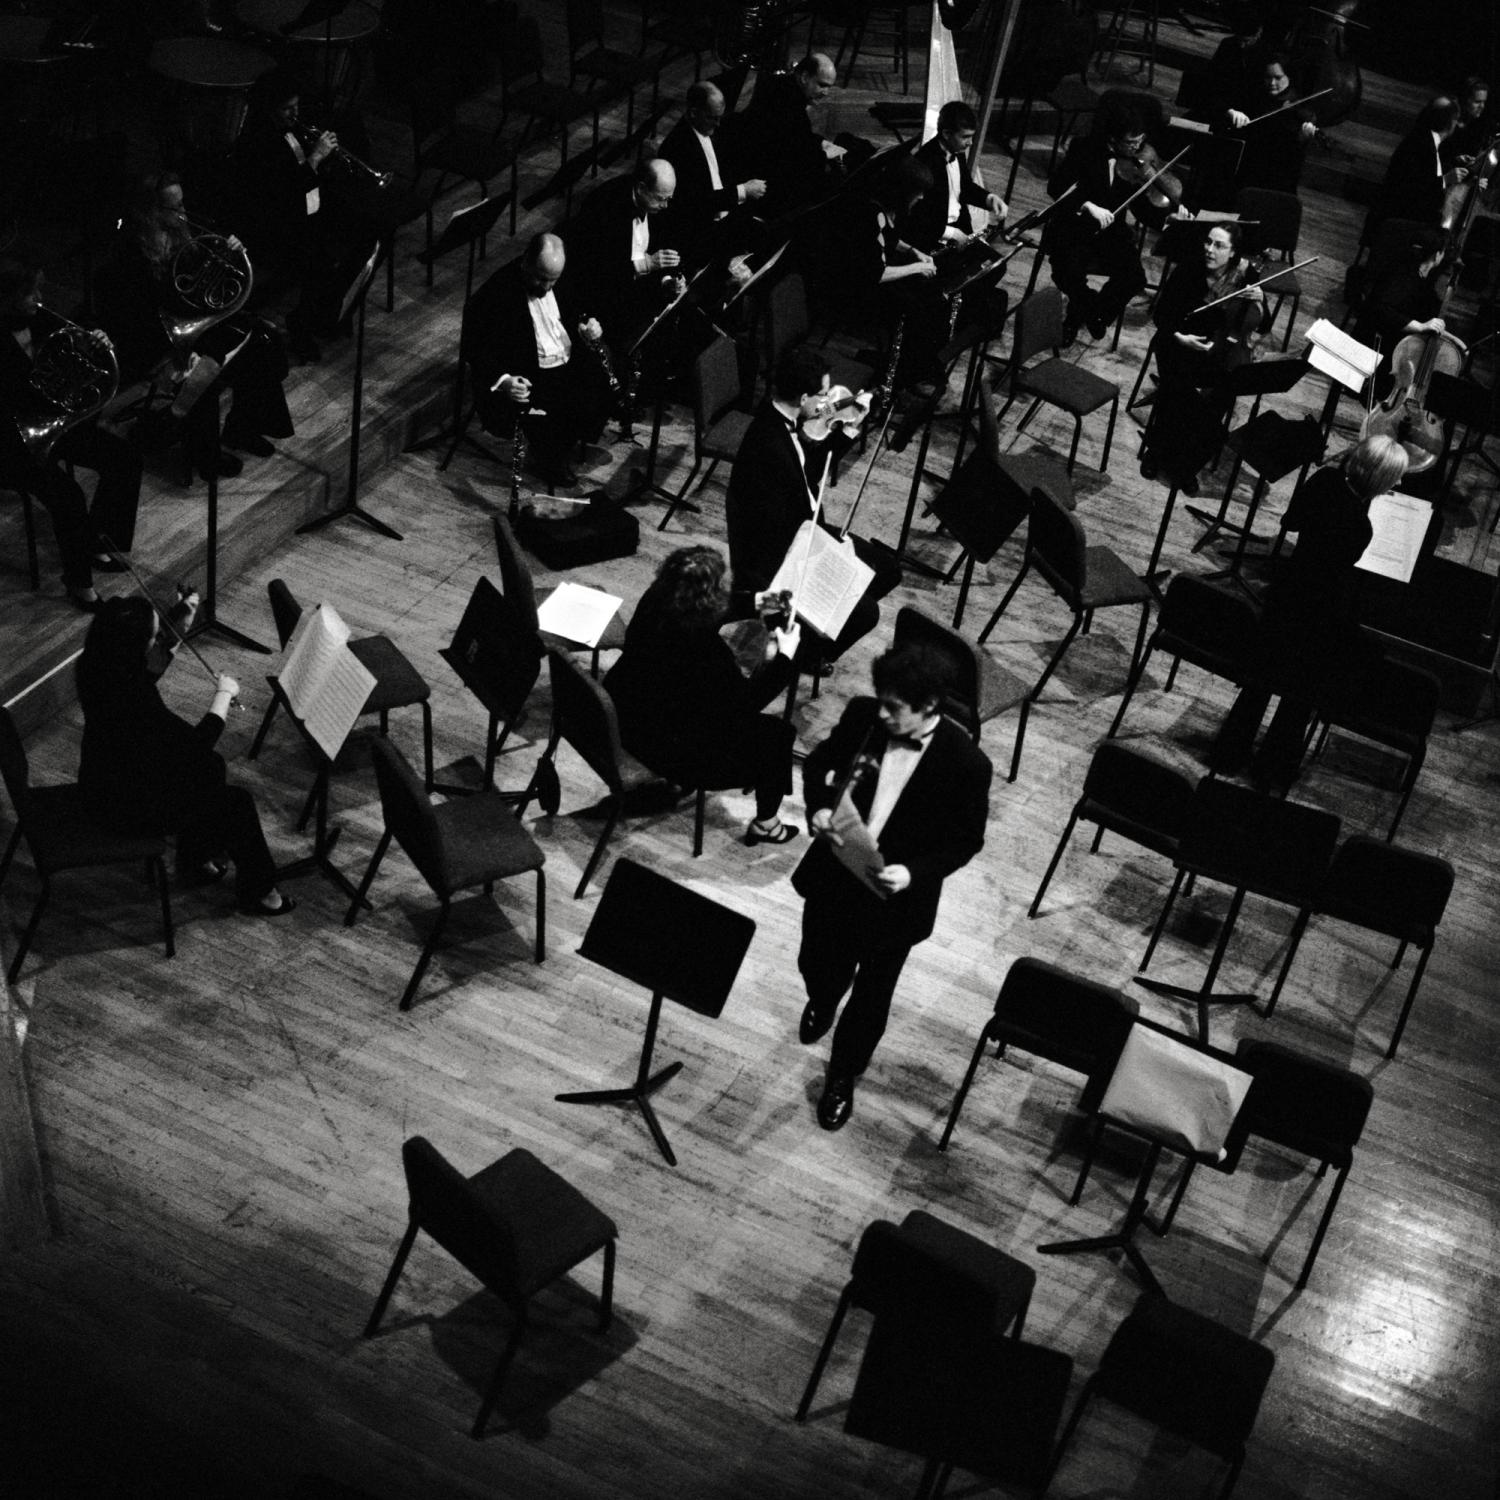 Boston Philharmonic Orchestra